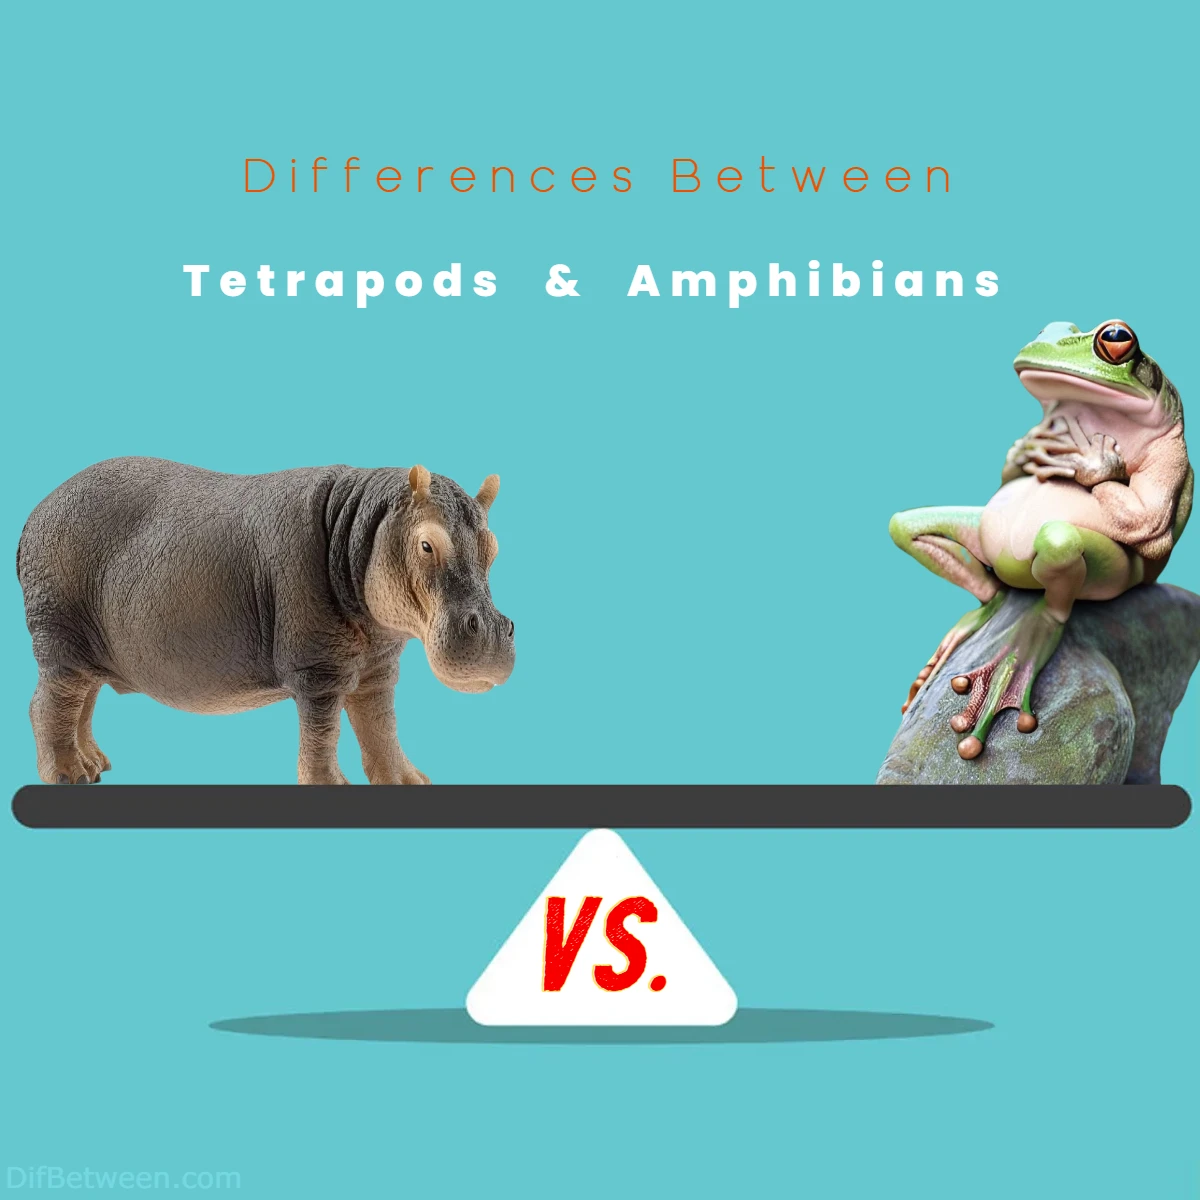 Differences Between Tetrapods vs Amphibians